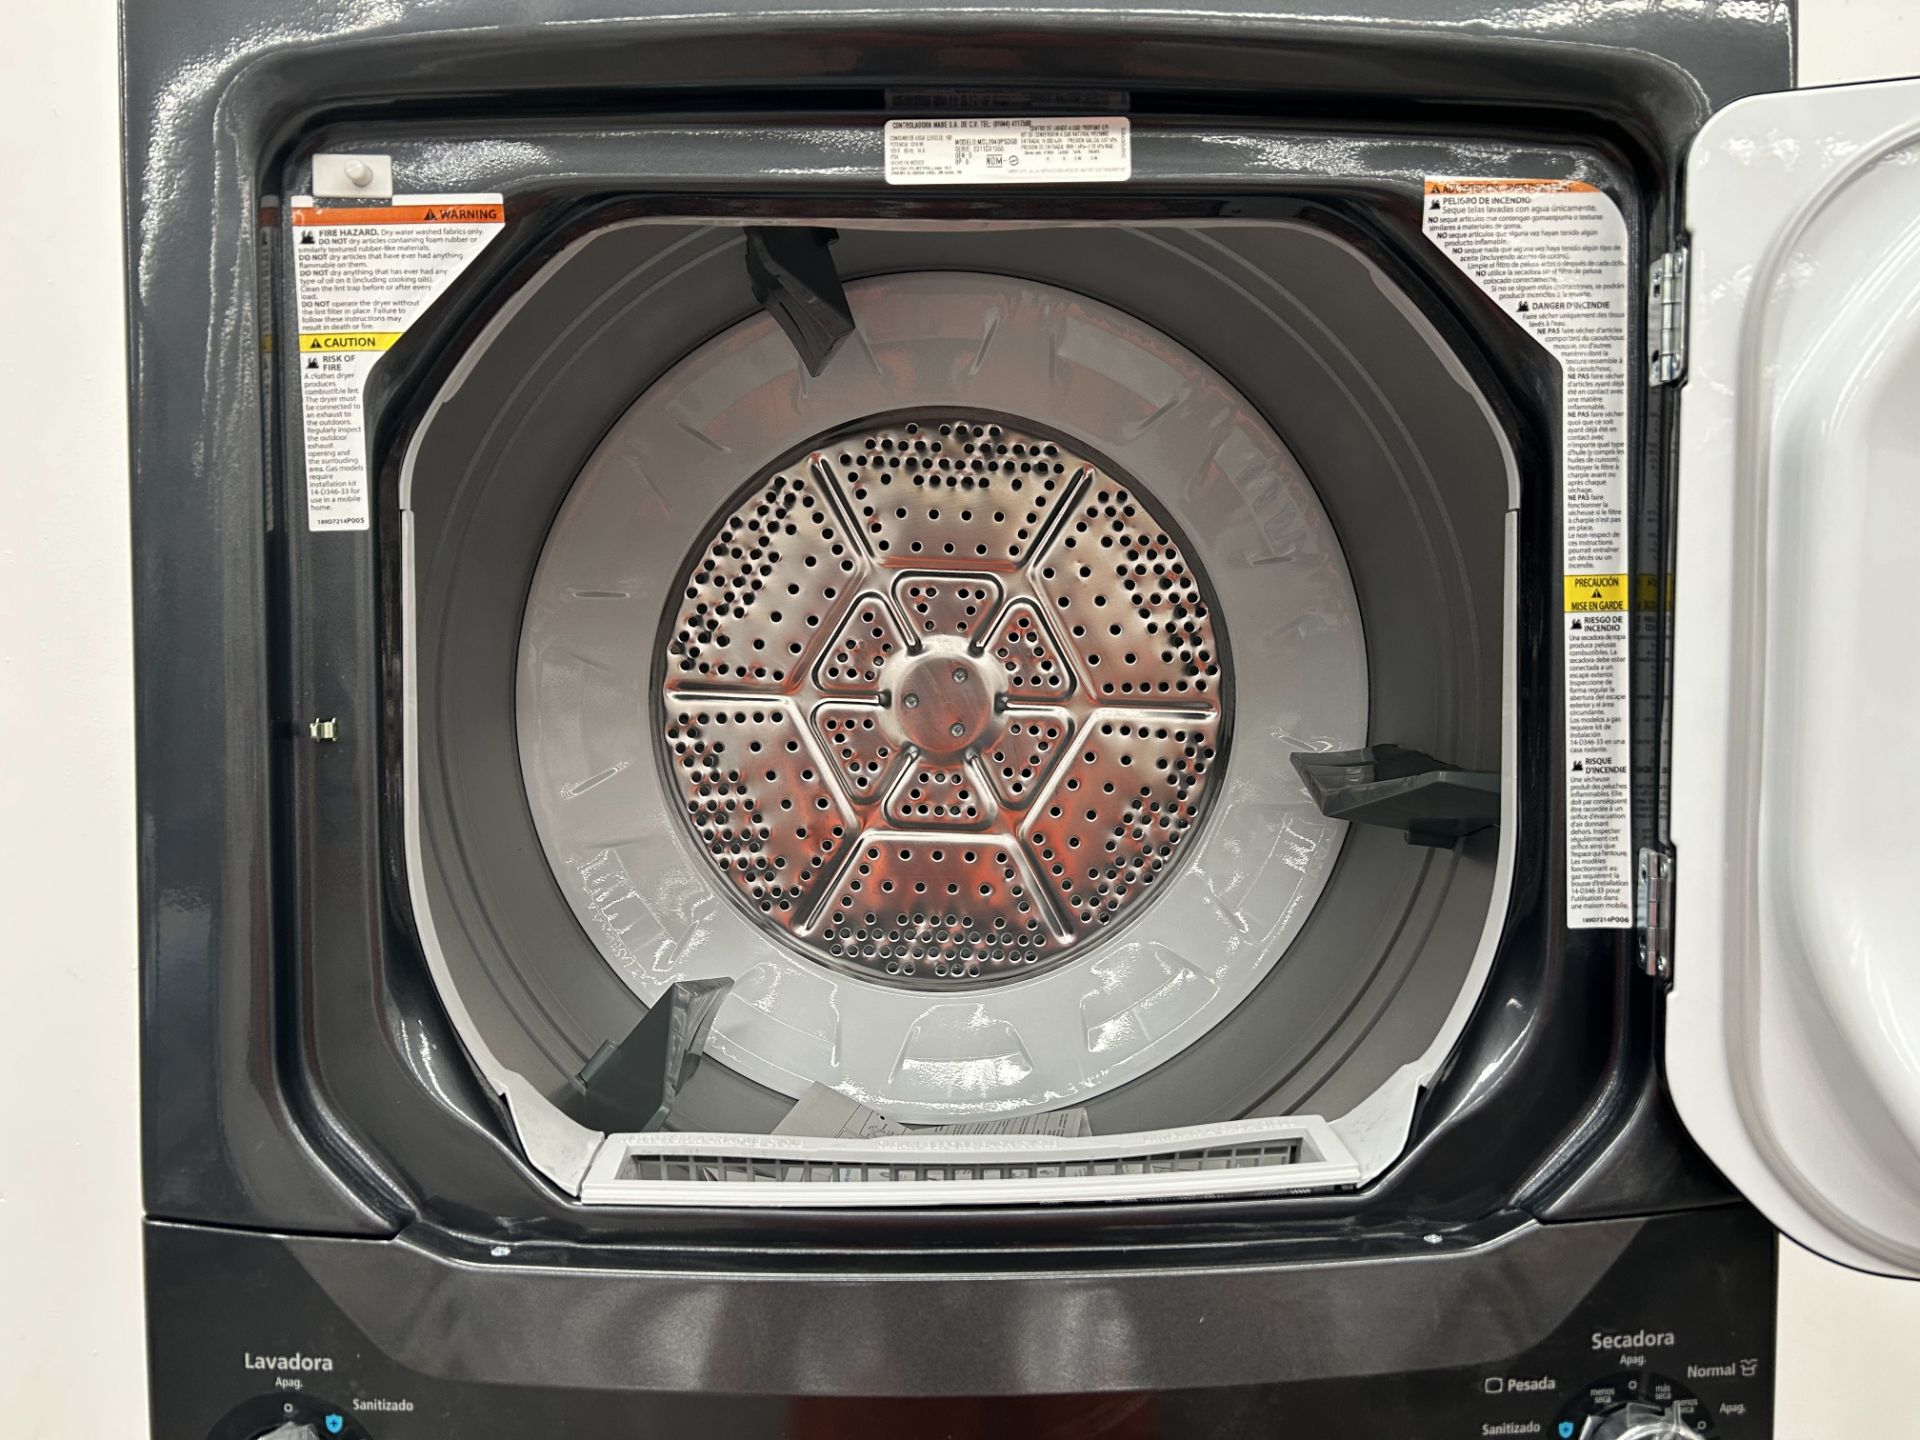 Centro de lavado Marca MABE, Modelo MCL2040PSDG0, Serie 01555, Color NEGRO (Equipo de devolución) - Image 4 of 7